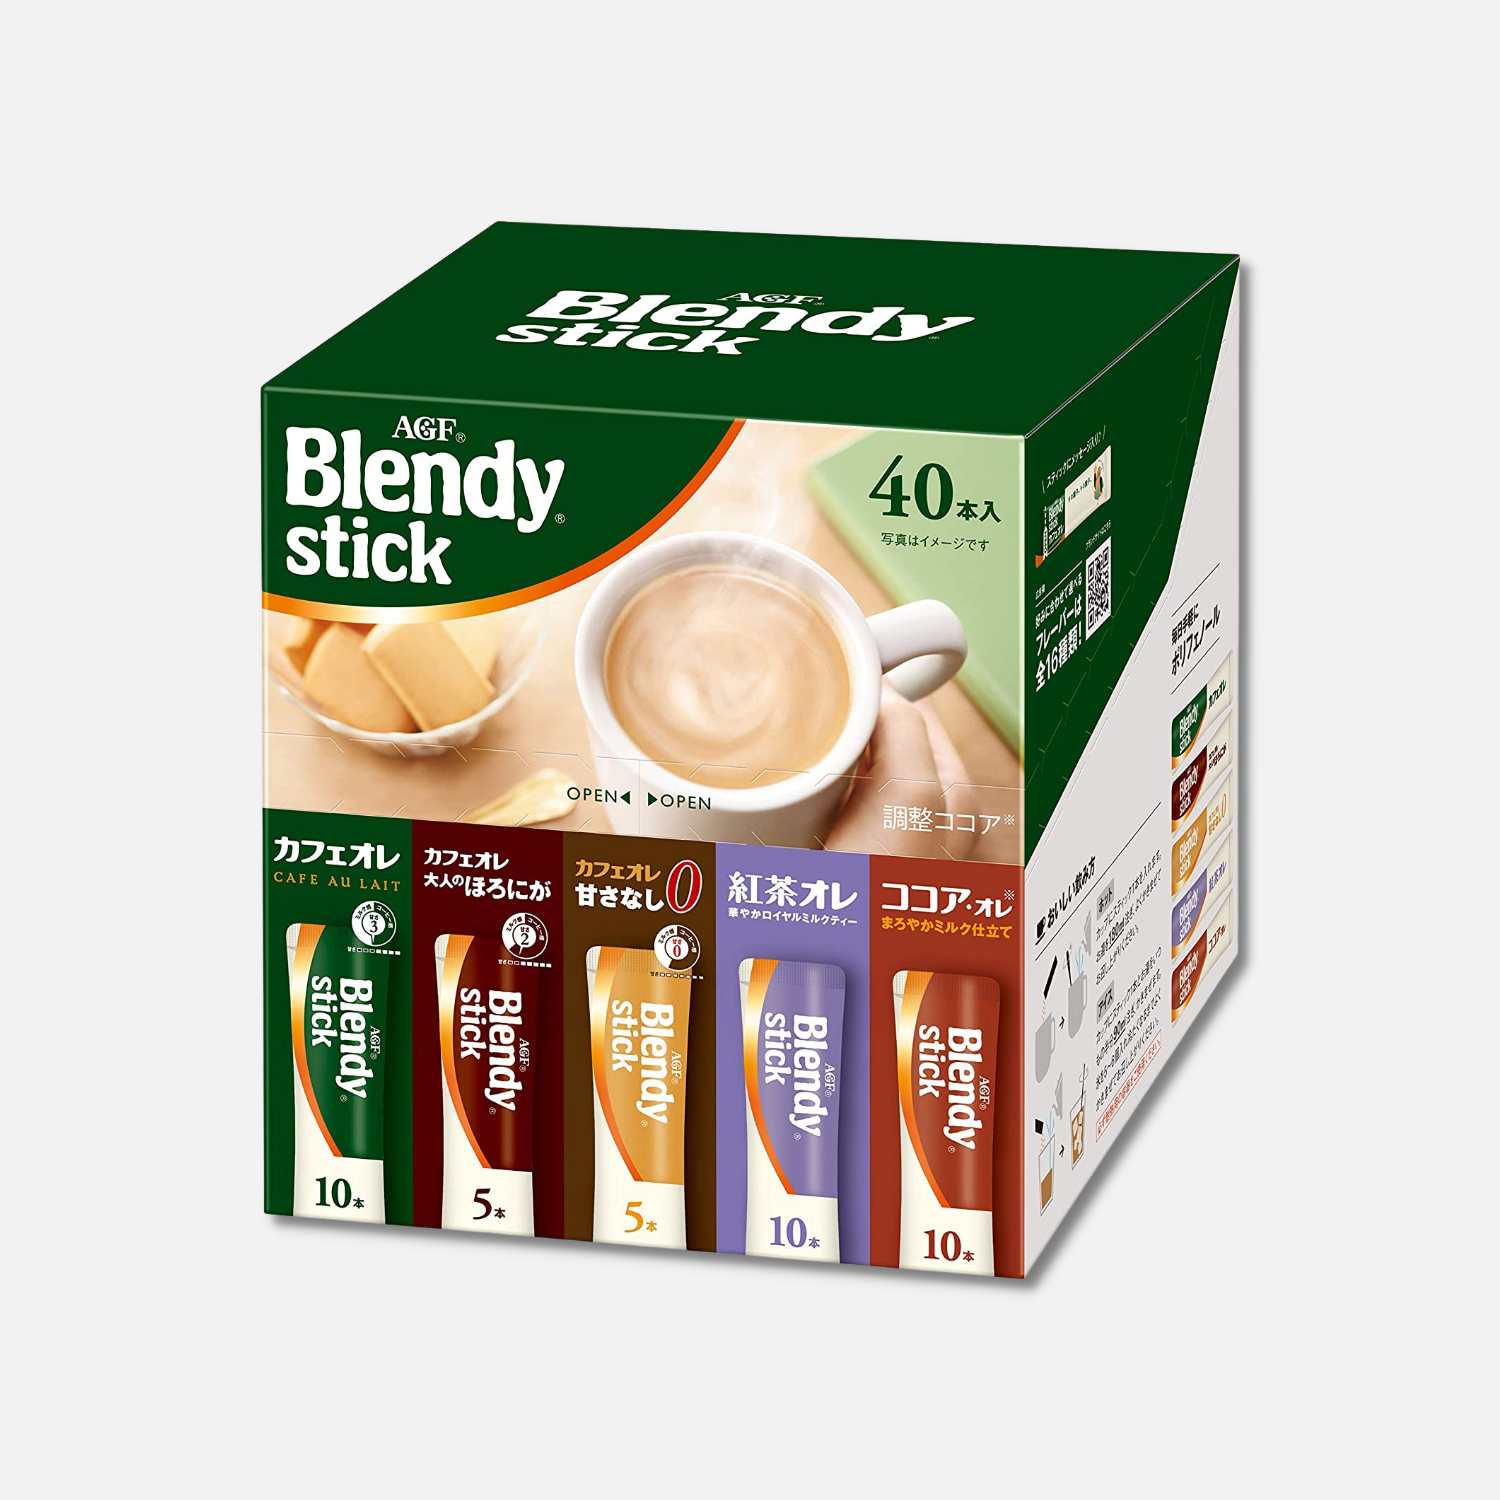 AGF Blendy Cafe Latory Stick Assortment 20 sticks Coffee Sticks Japan 